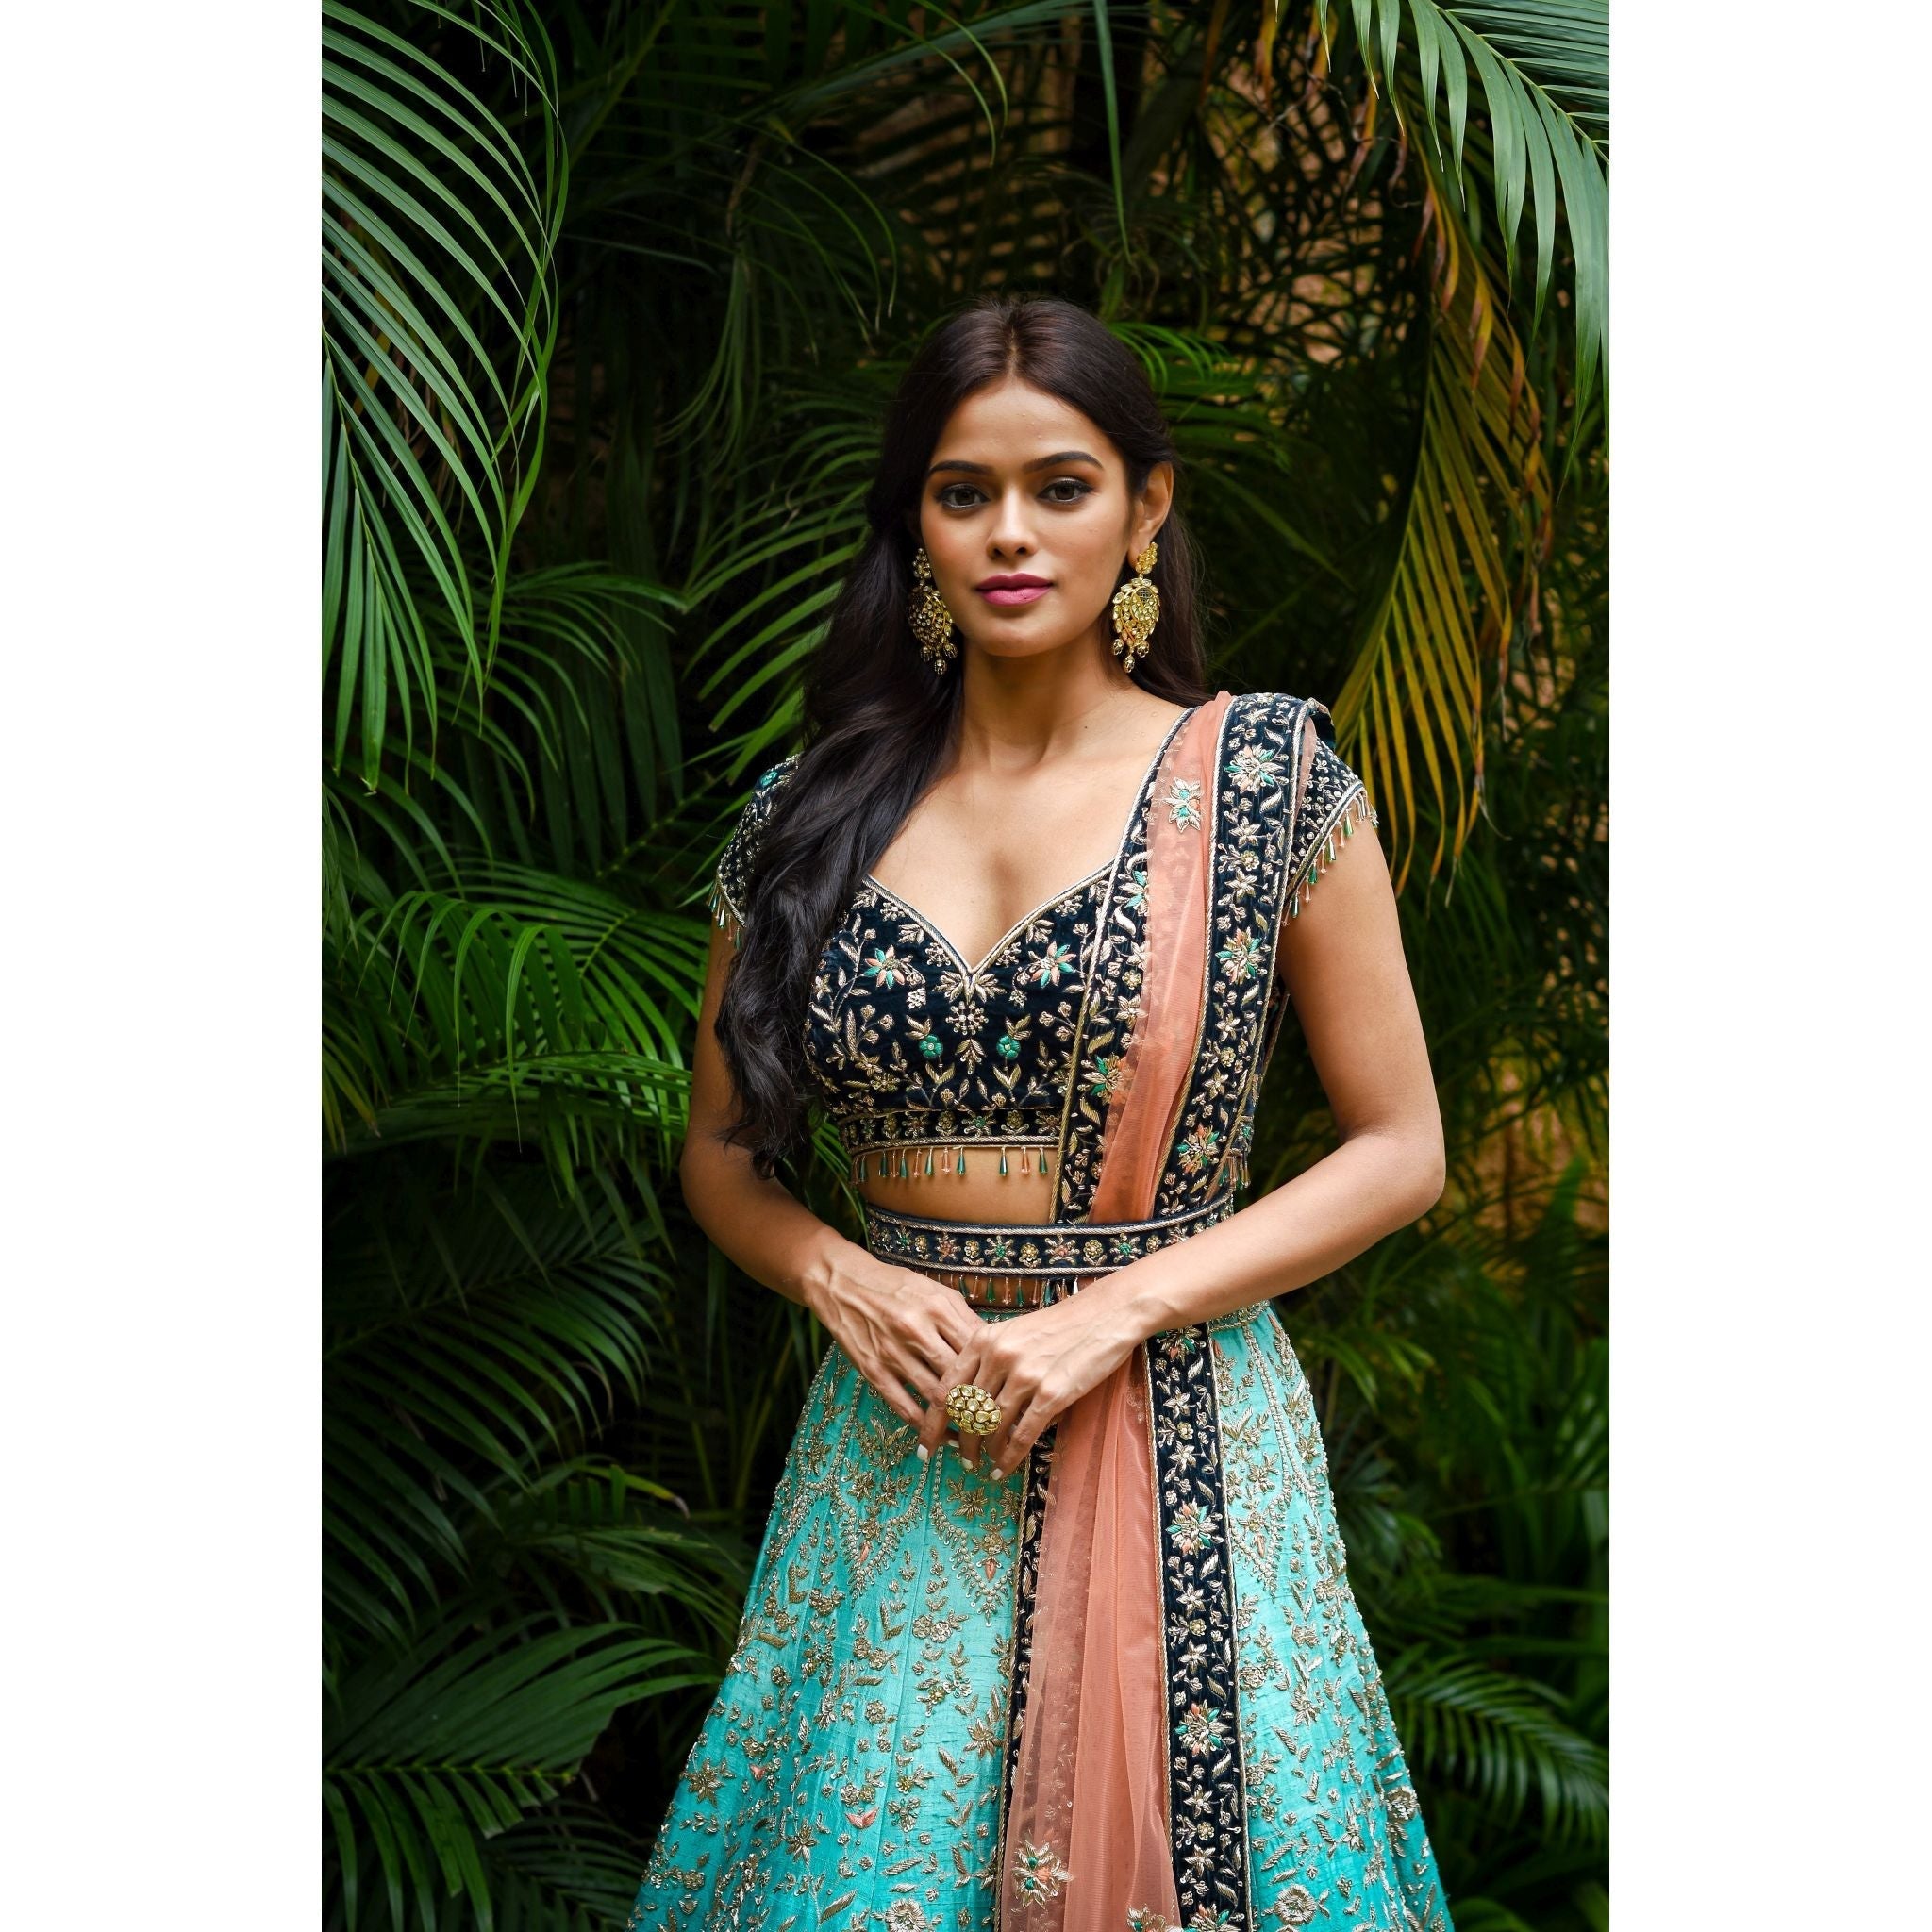 Turquoise Teal Archaic Lehenga Set - Indian Designer Bridal Wedding Outfit